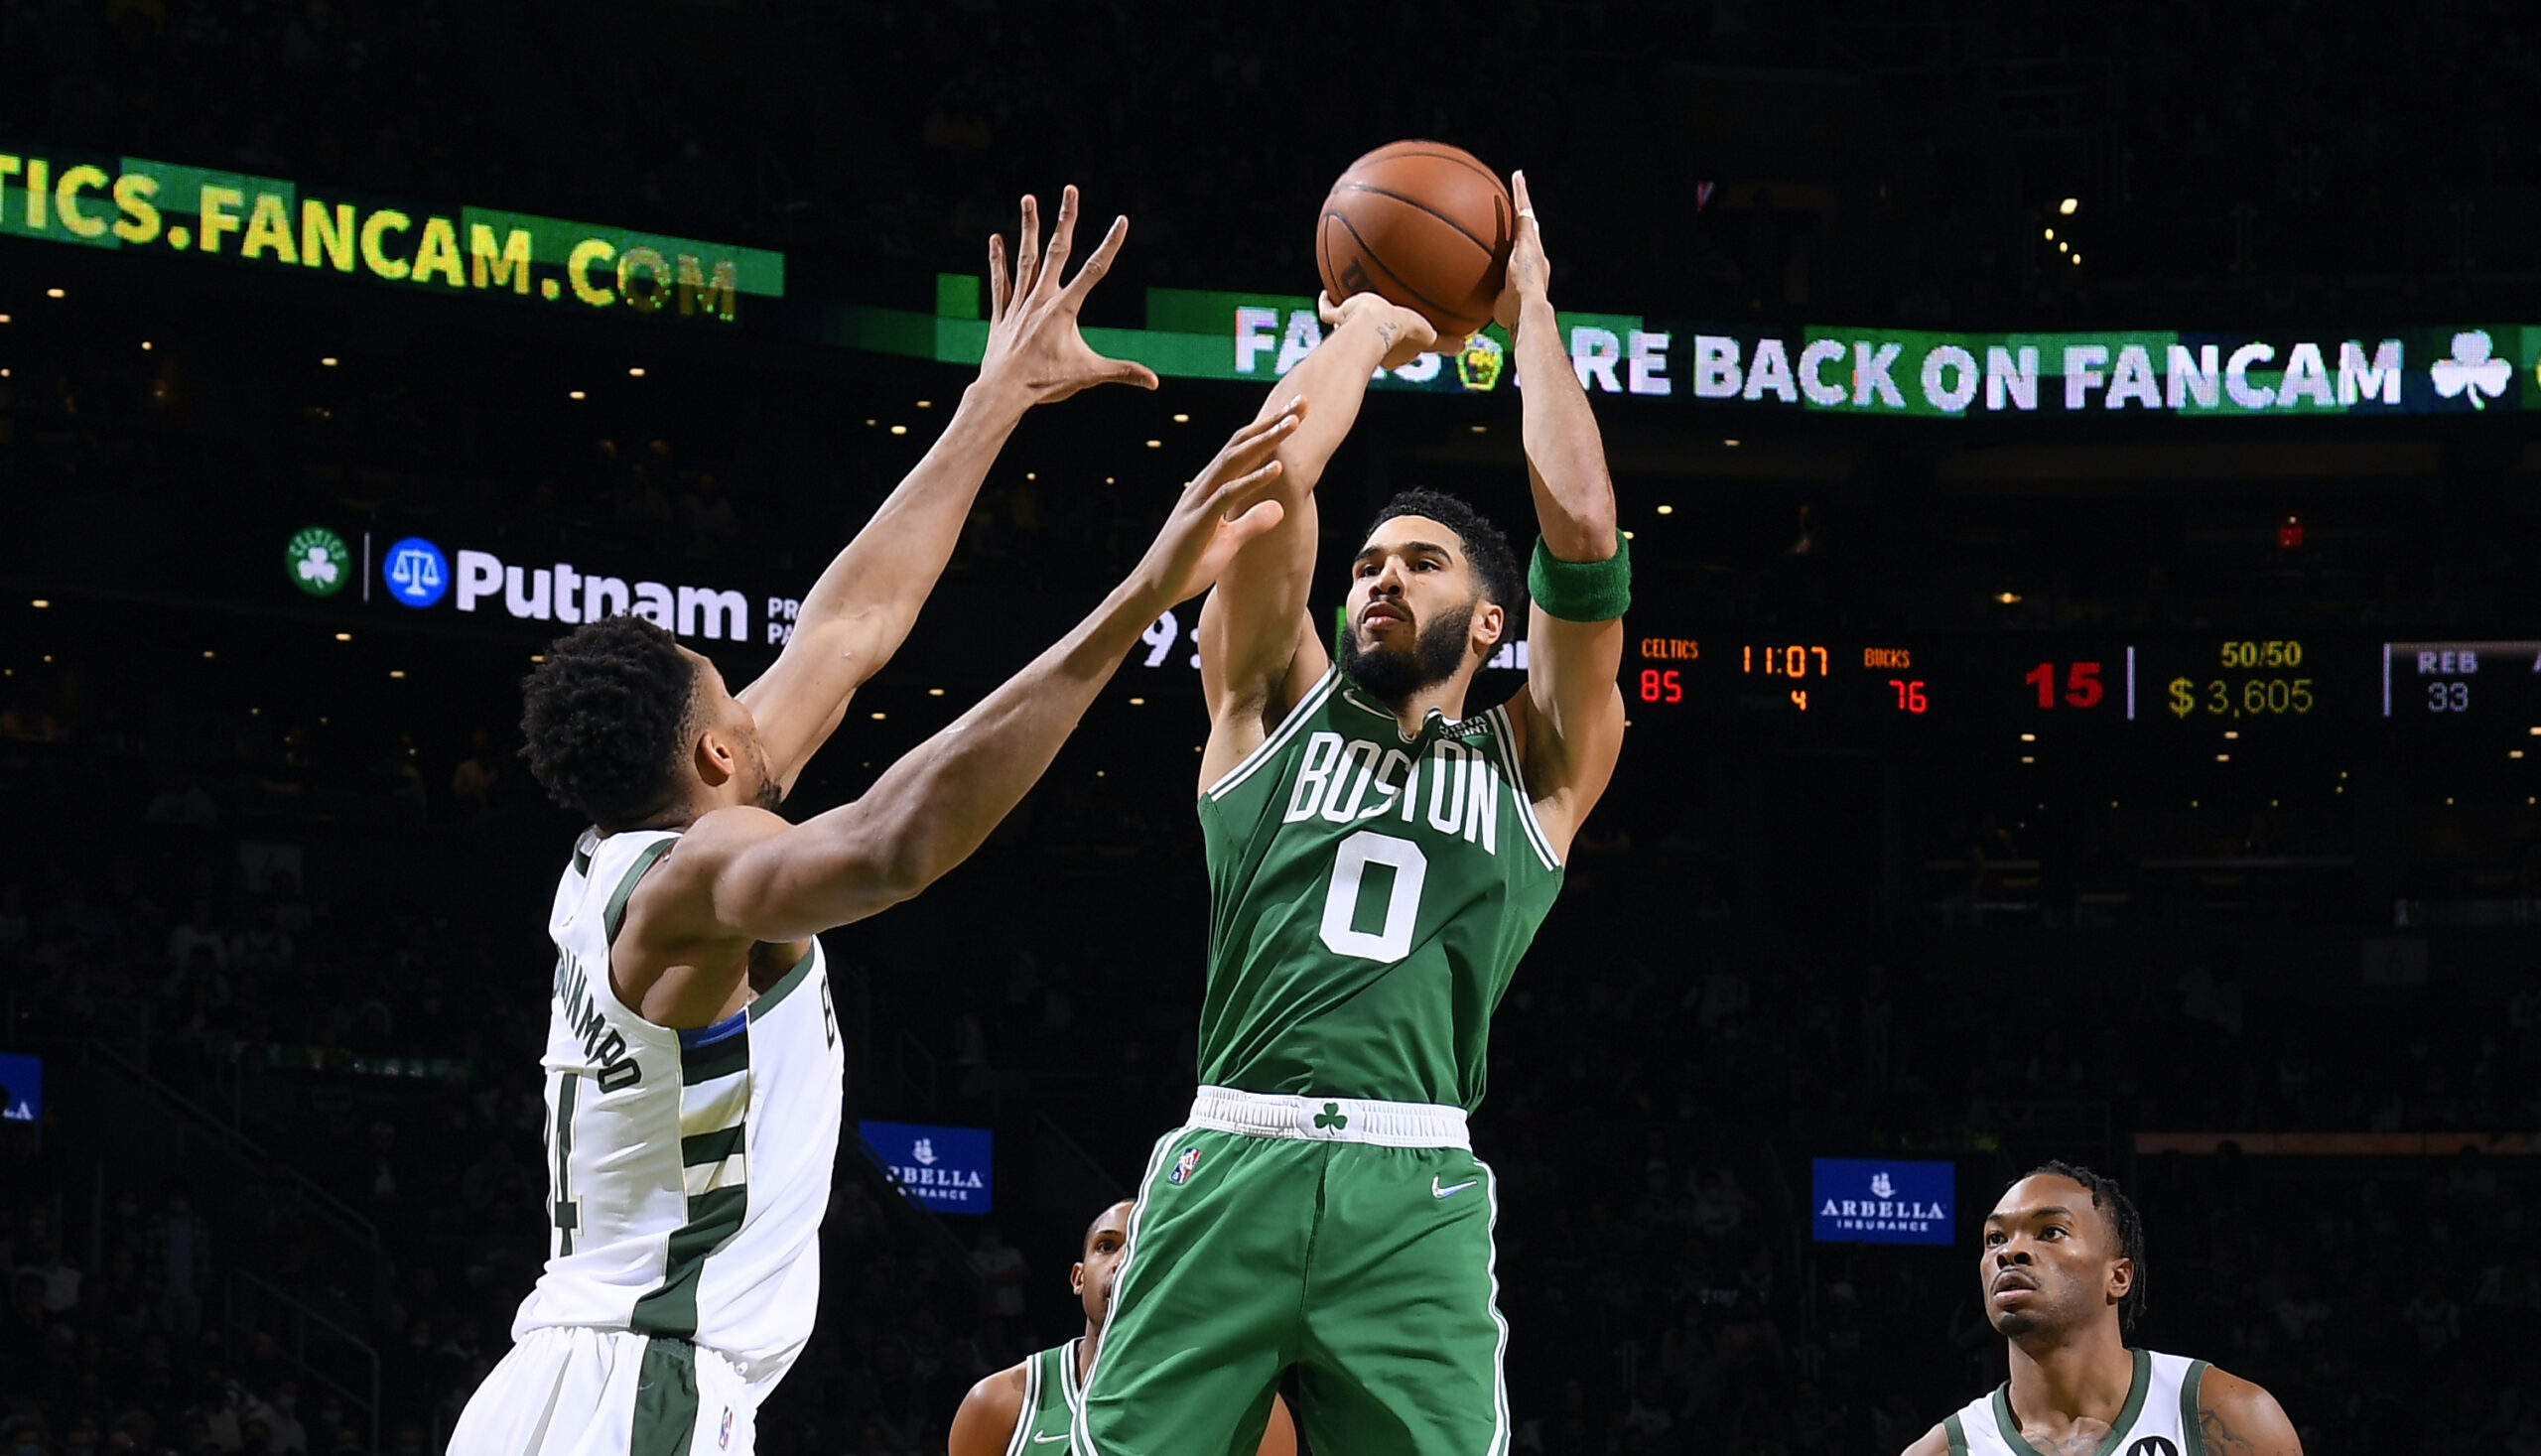 Bucks vs Celtics Live Stream Start Time, Where to Watch Digital Trends